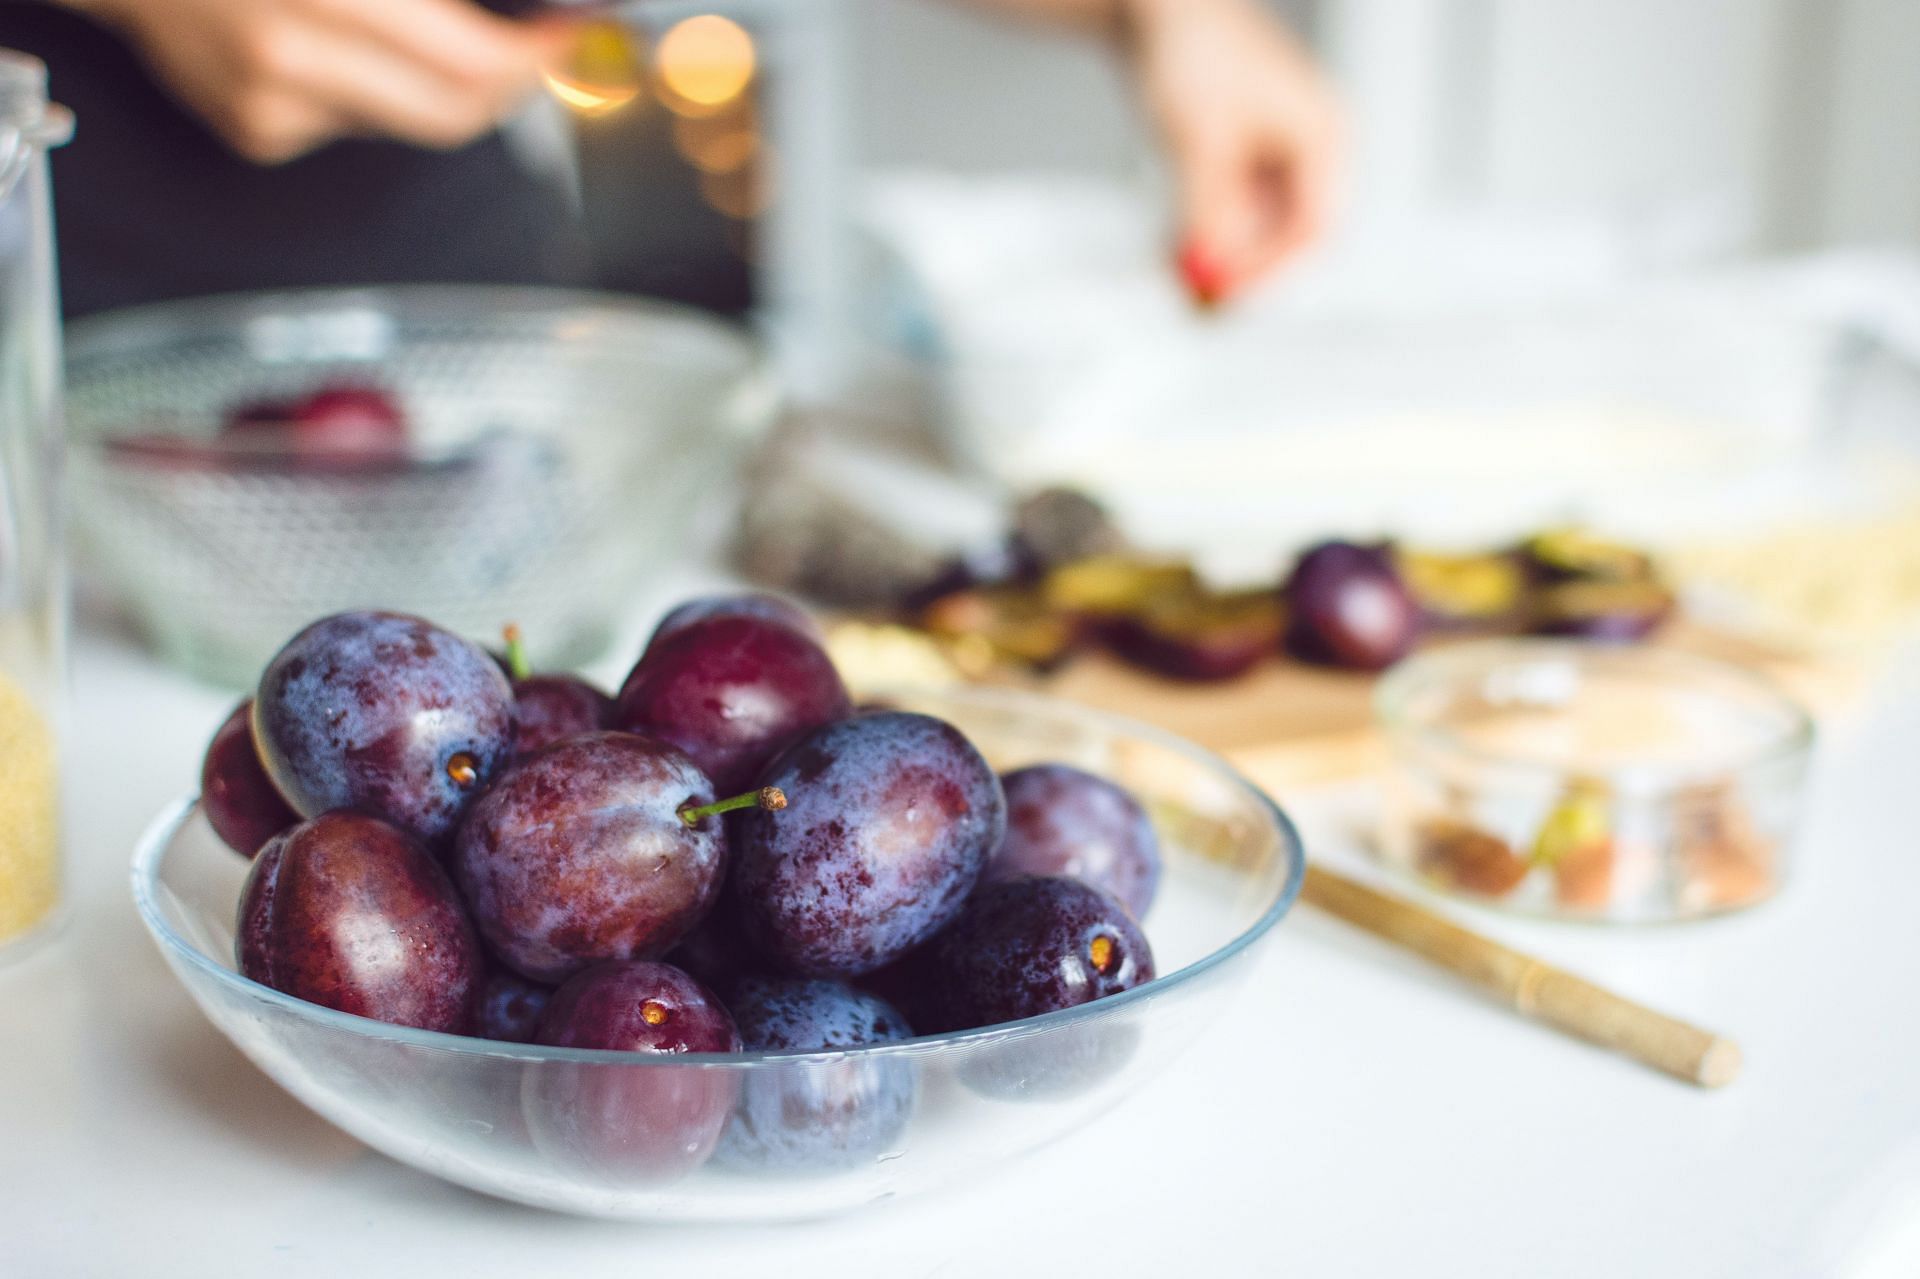 The benefits of plums include antioxidant properties (Image via Unsplash/Jakub Kapusnak)